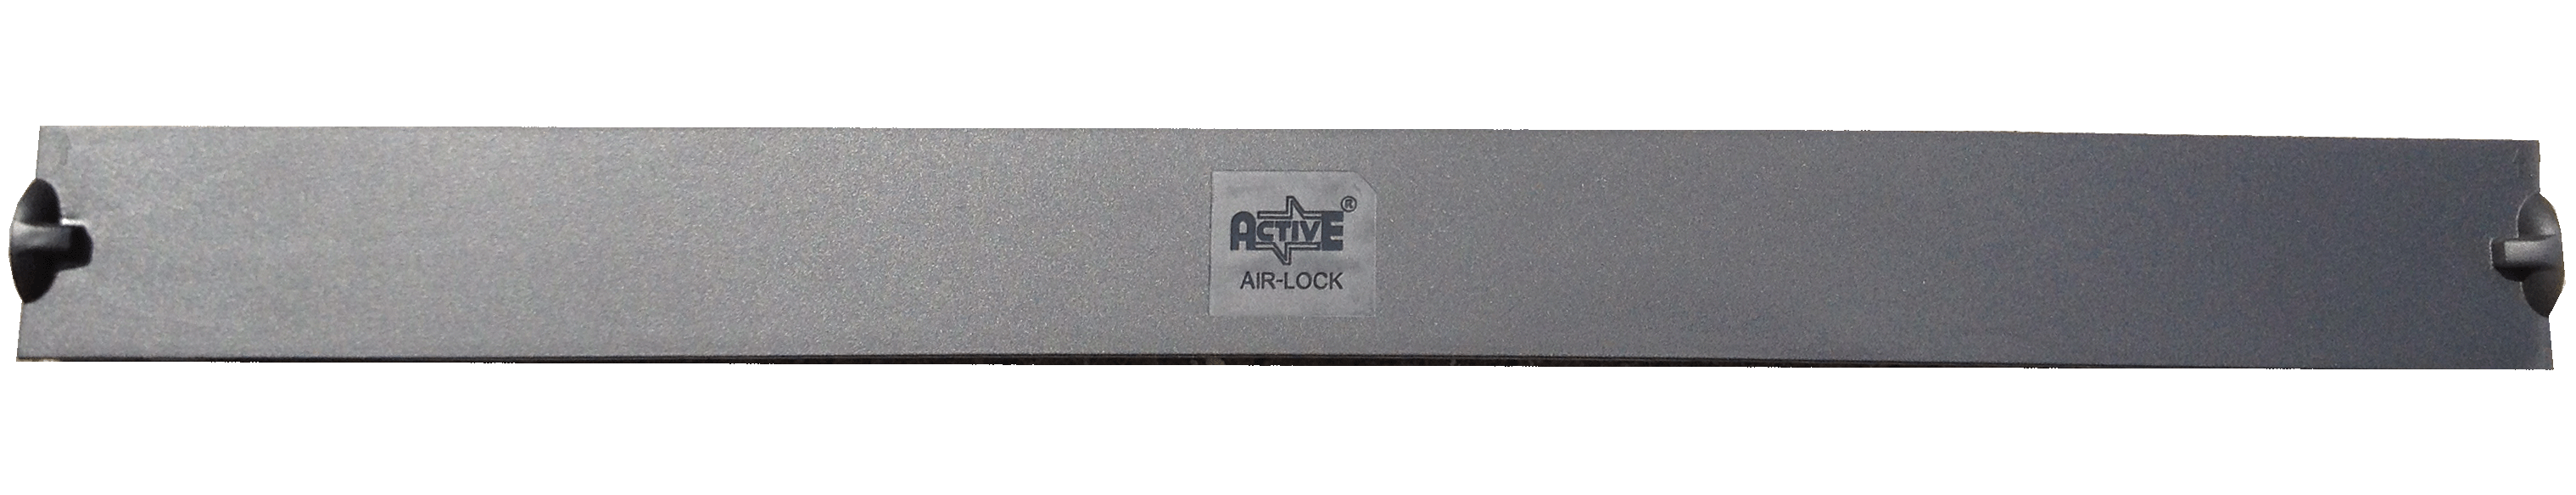 Active Air-lock